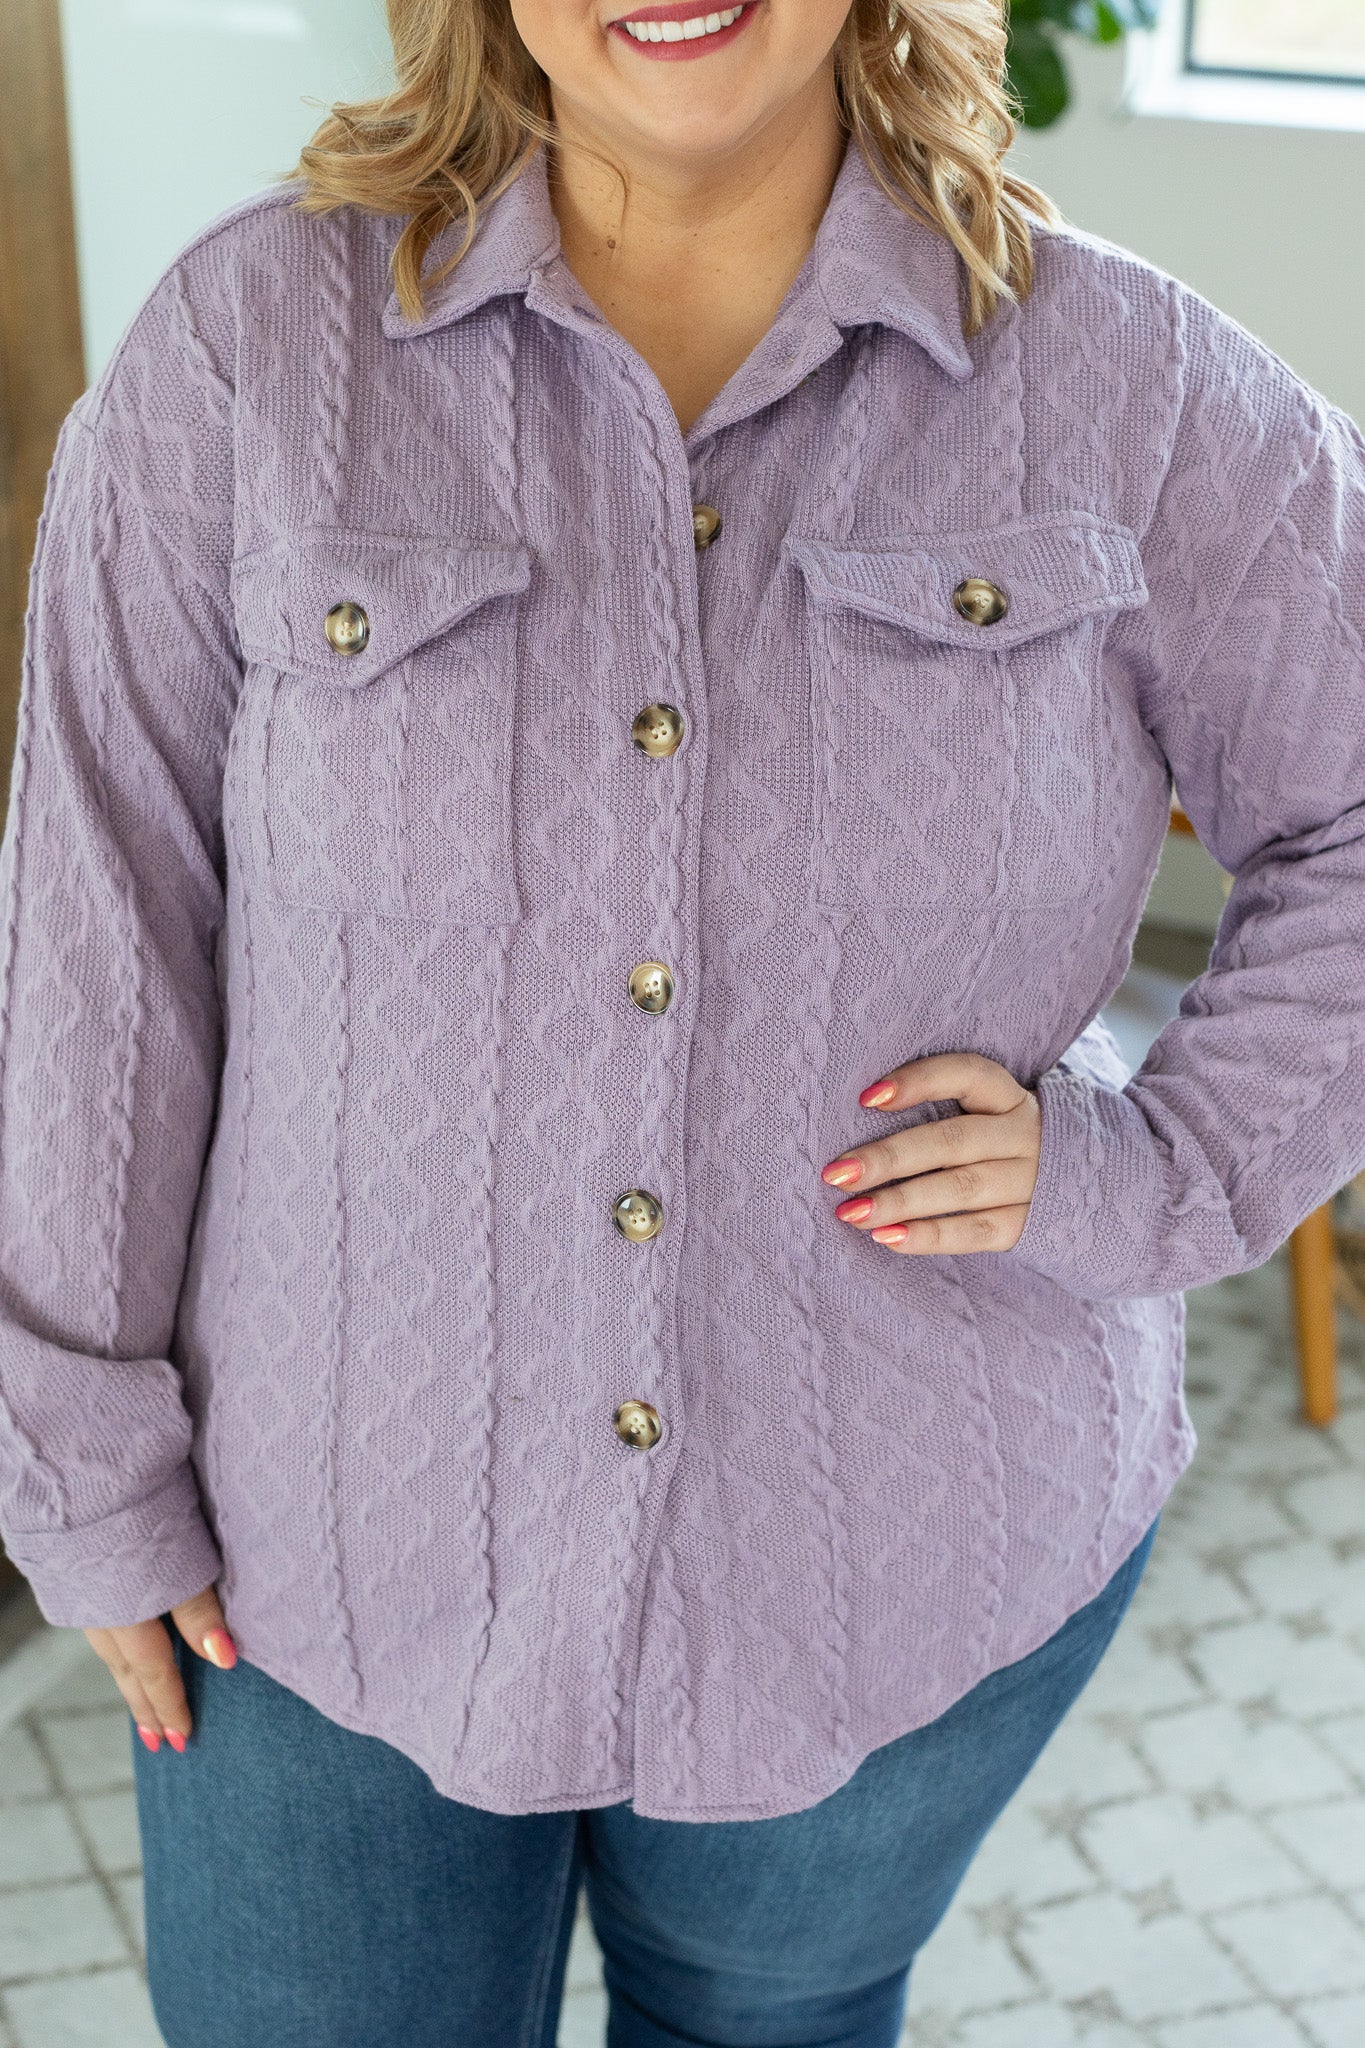 Cable Knit Jacket - Lavender